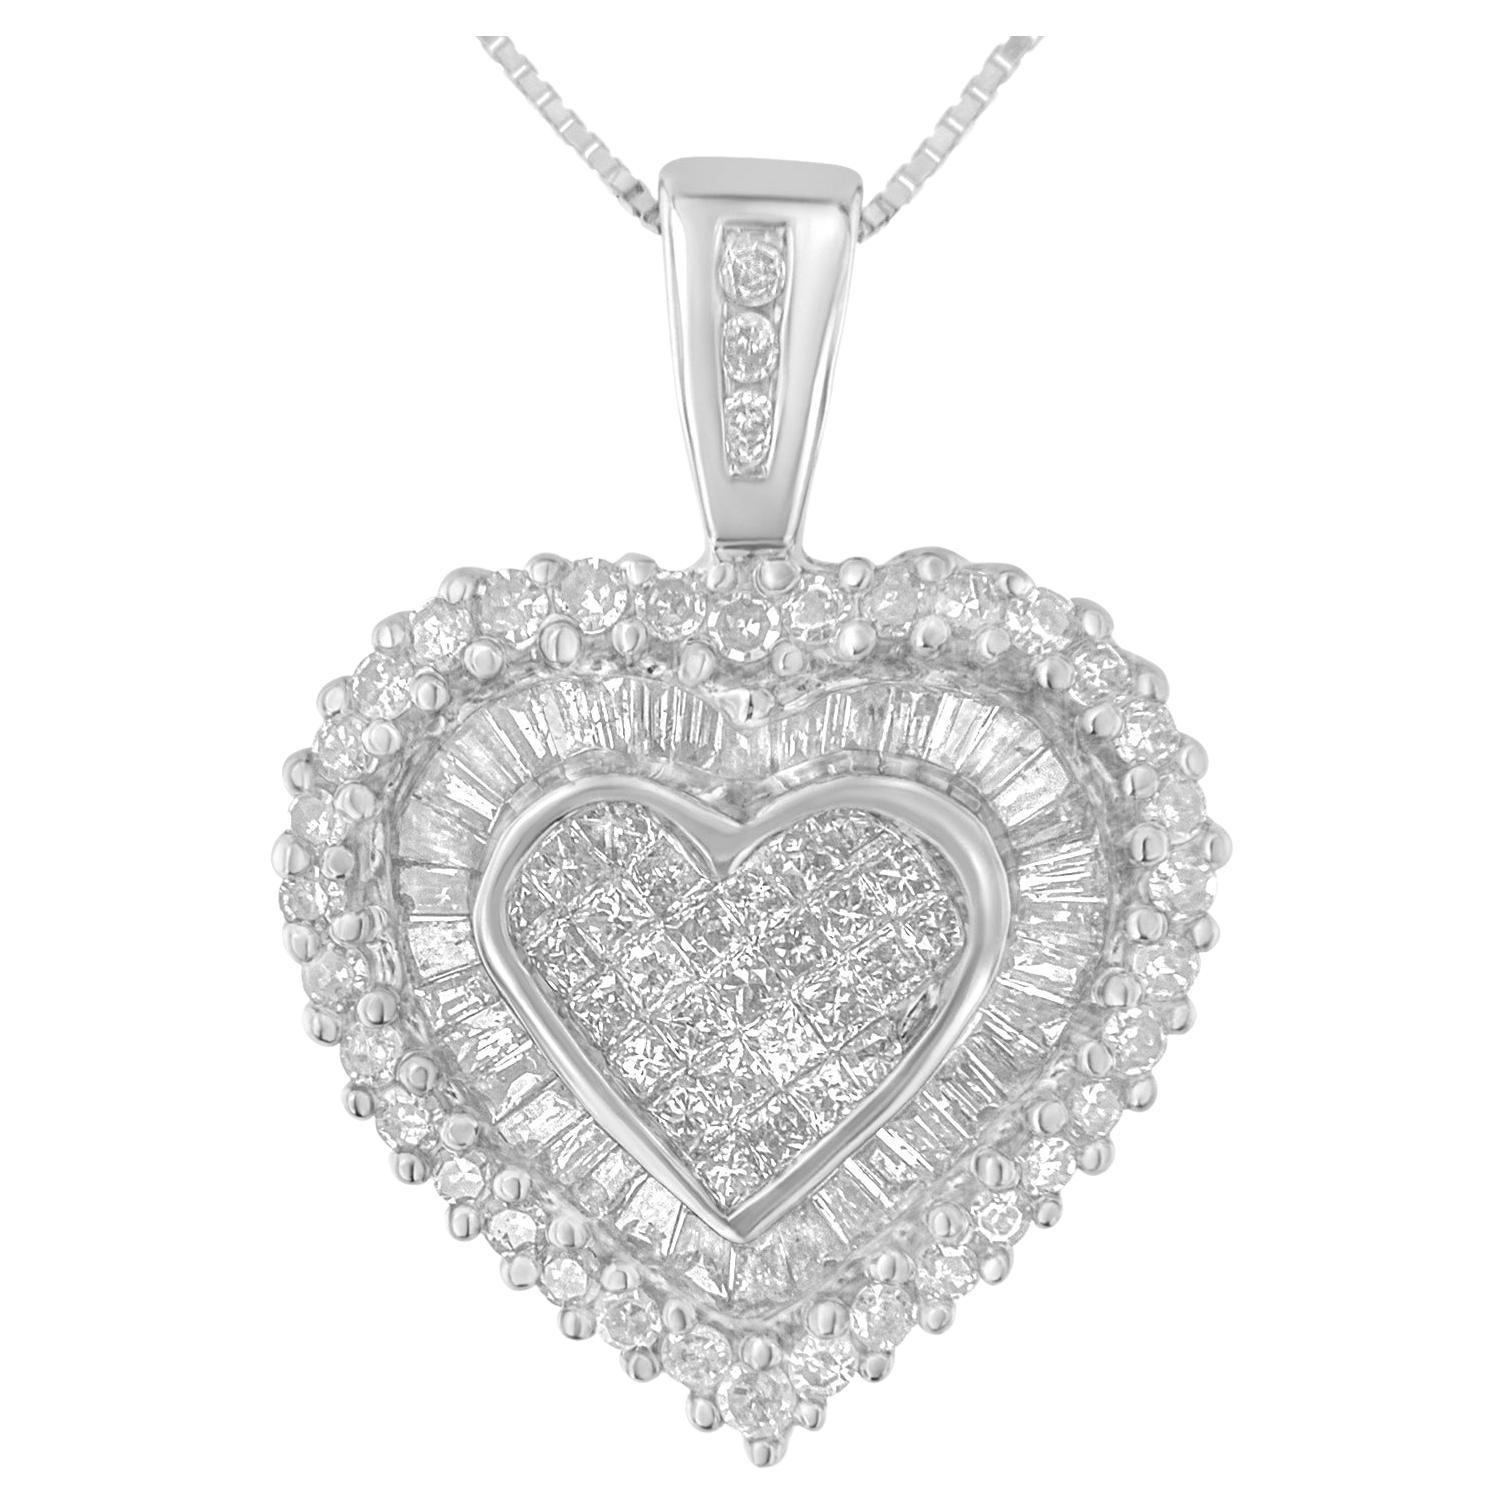 10K White Gold 1.0 Carat Multi Cut Diamond Heart Pendant Necklace